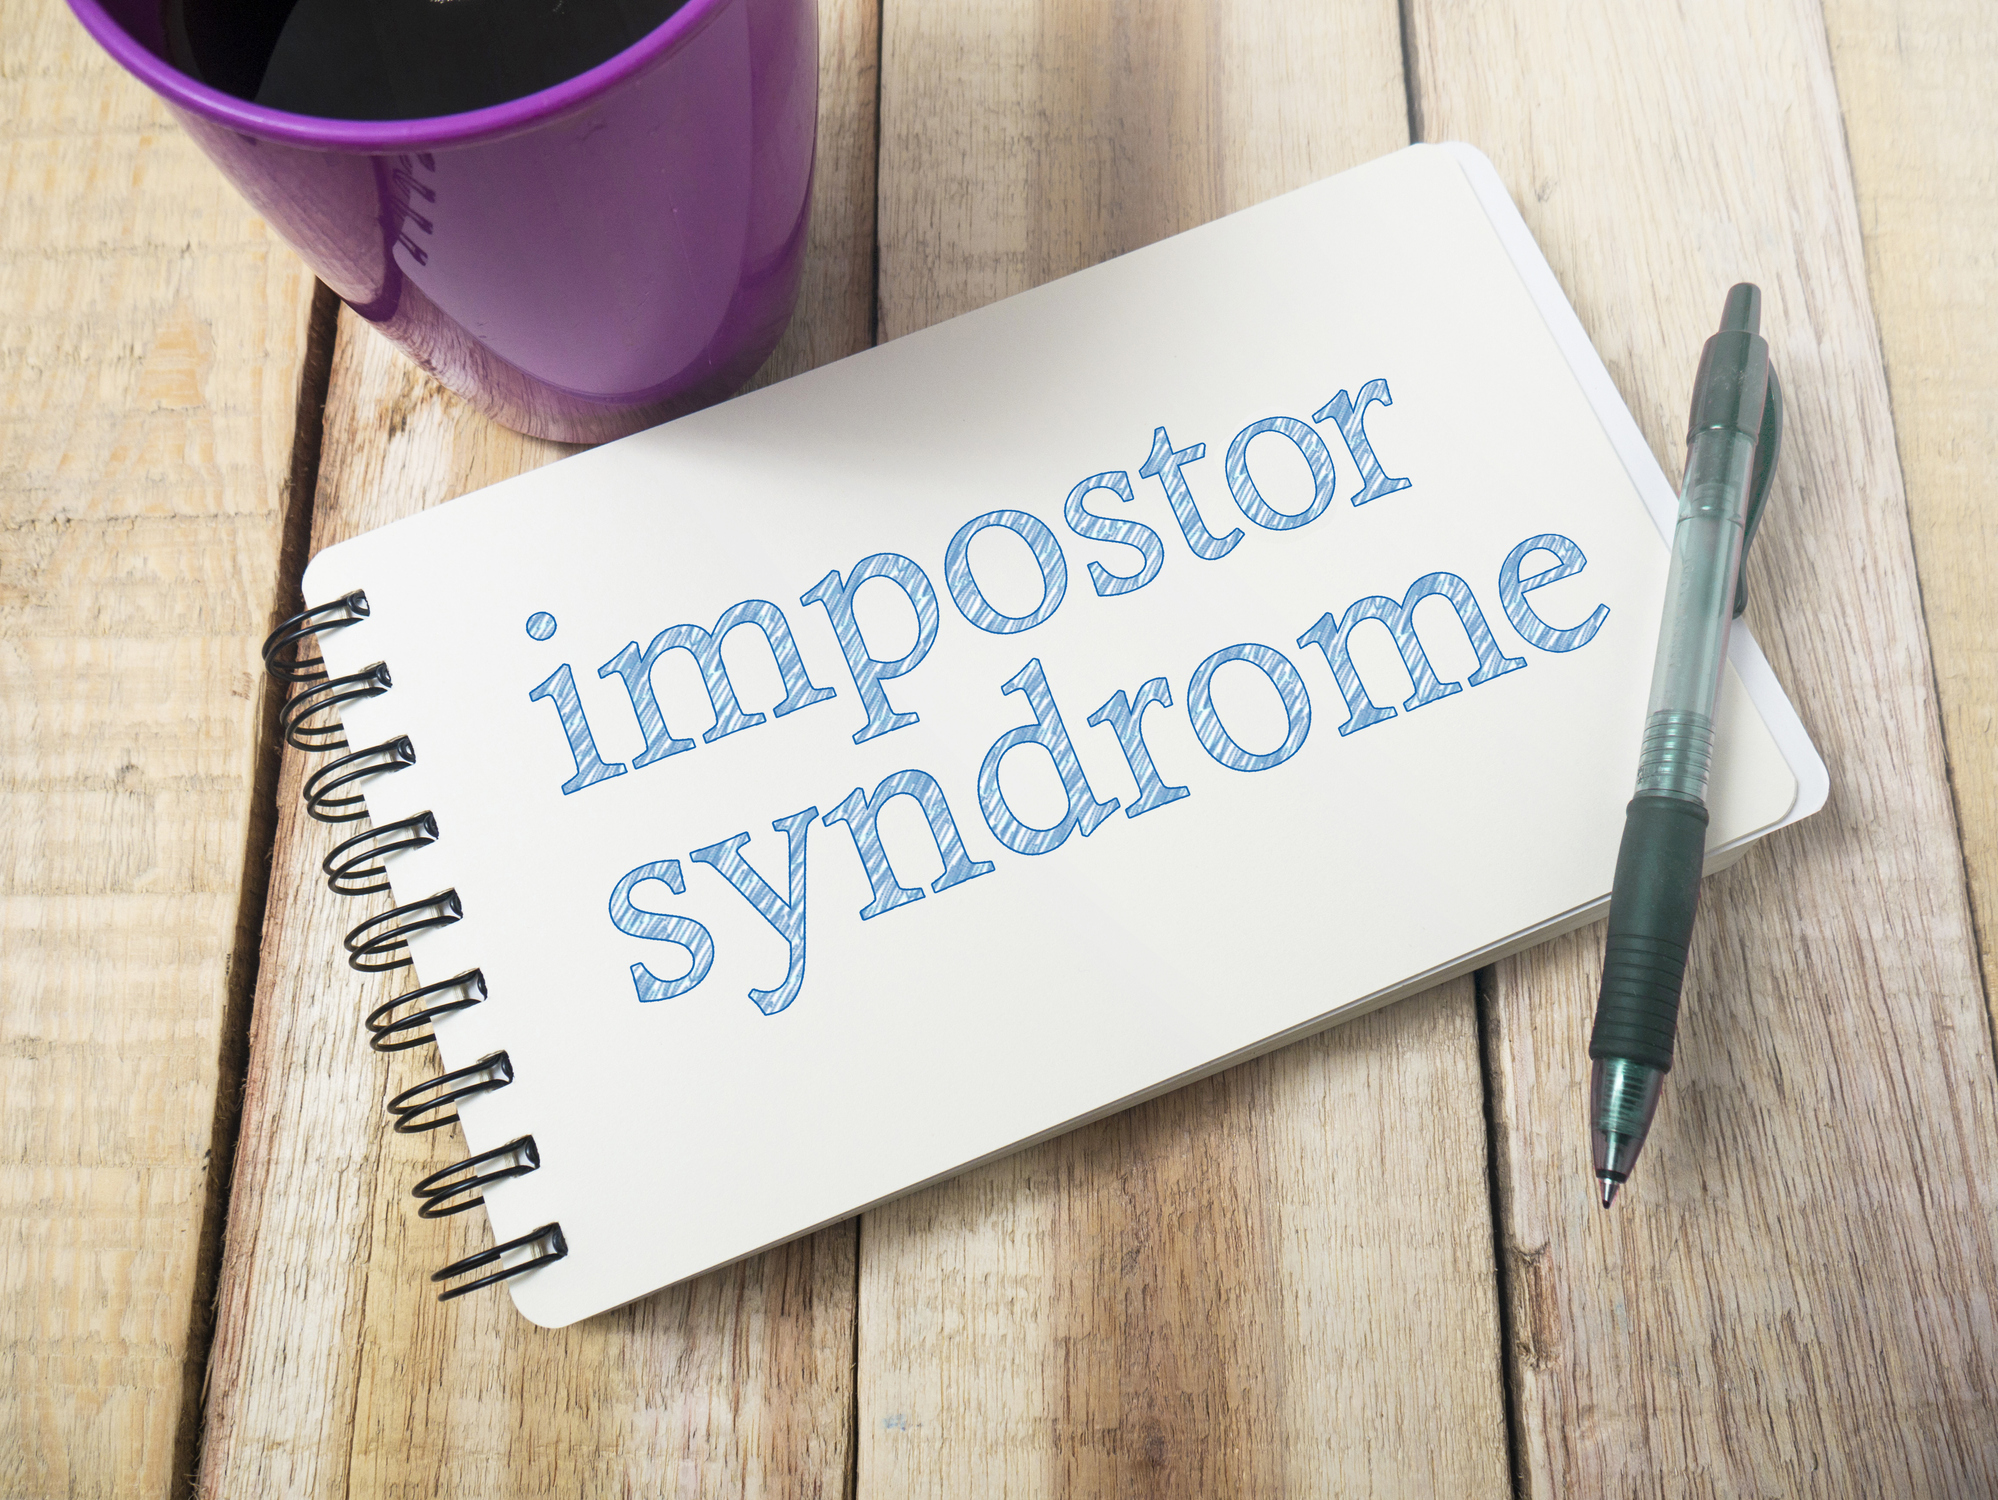 Impostor Syndrome